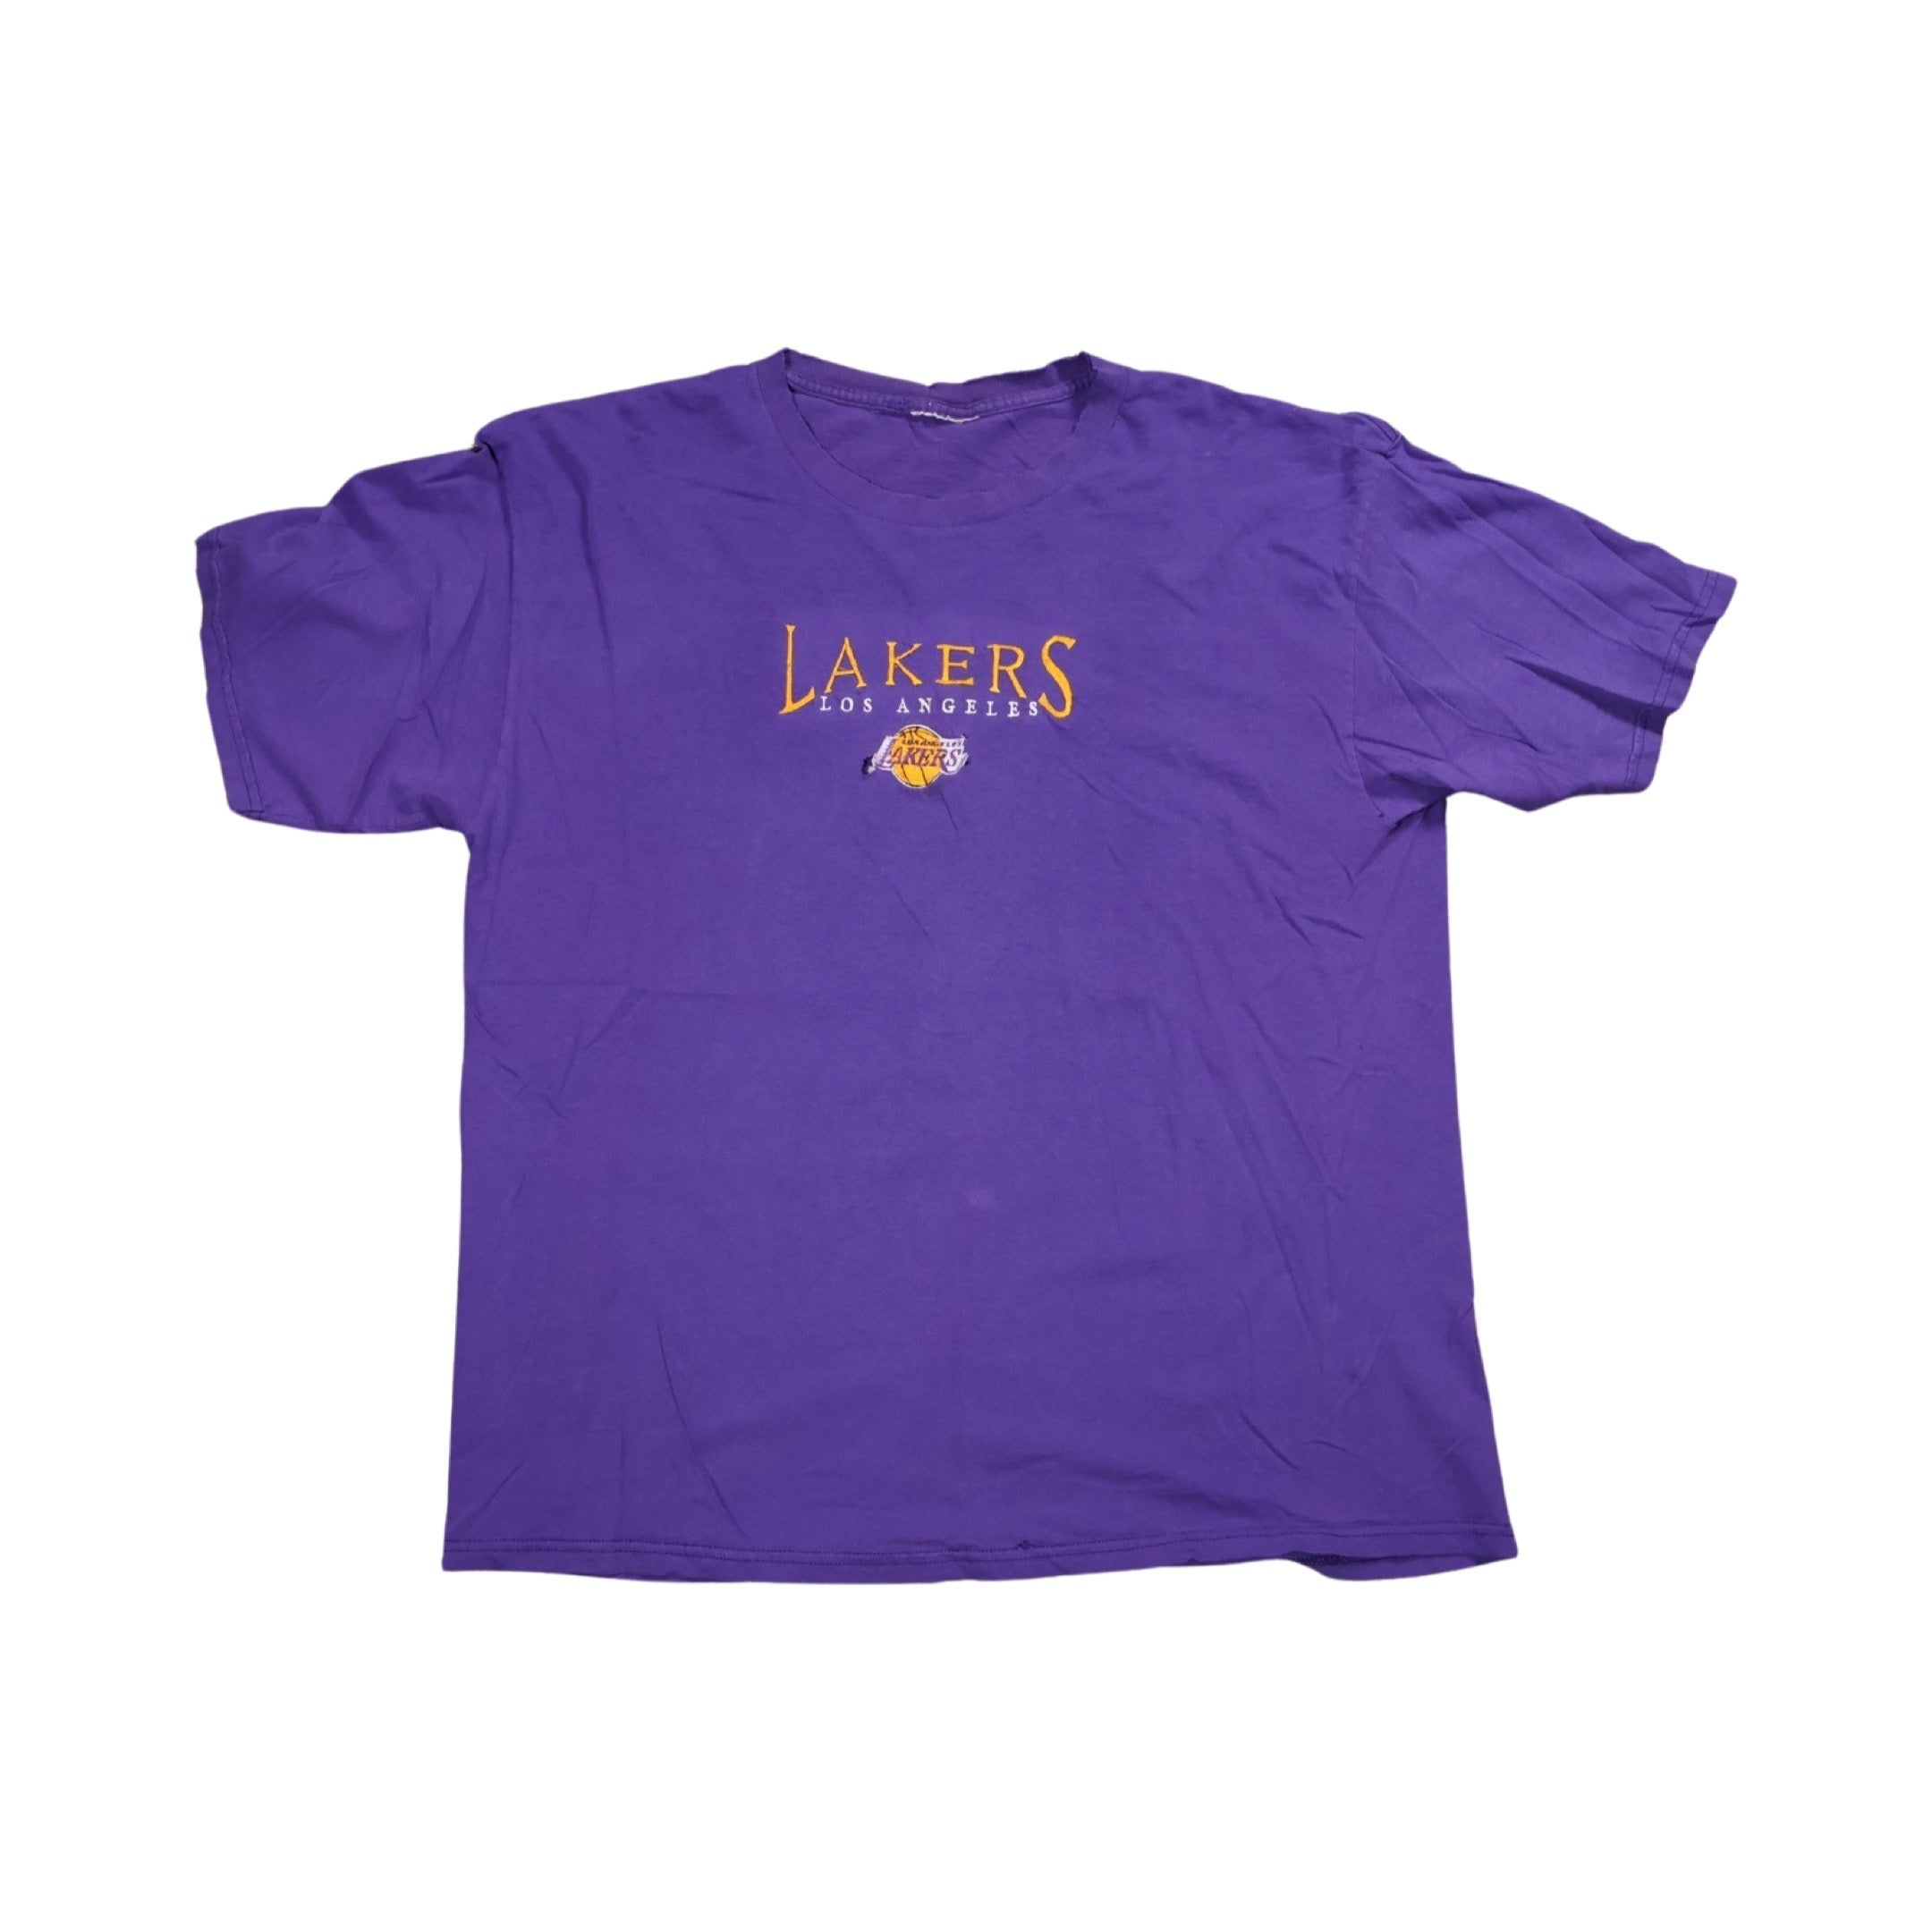 Los Angeles Lakers 90s T-Shirt (XL)